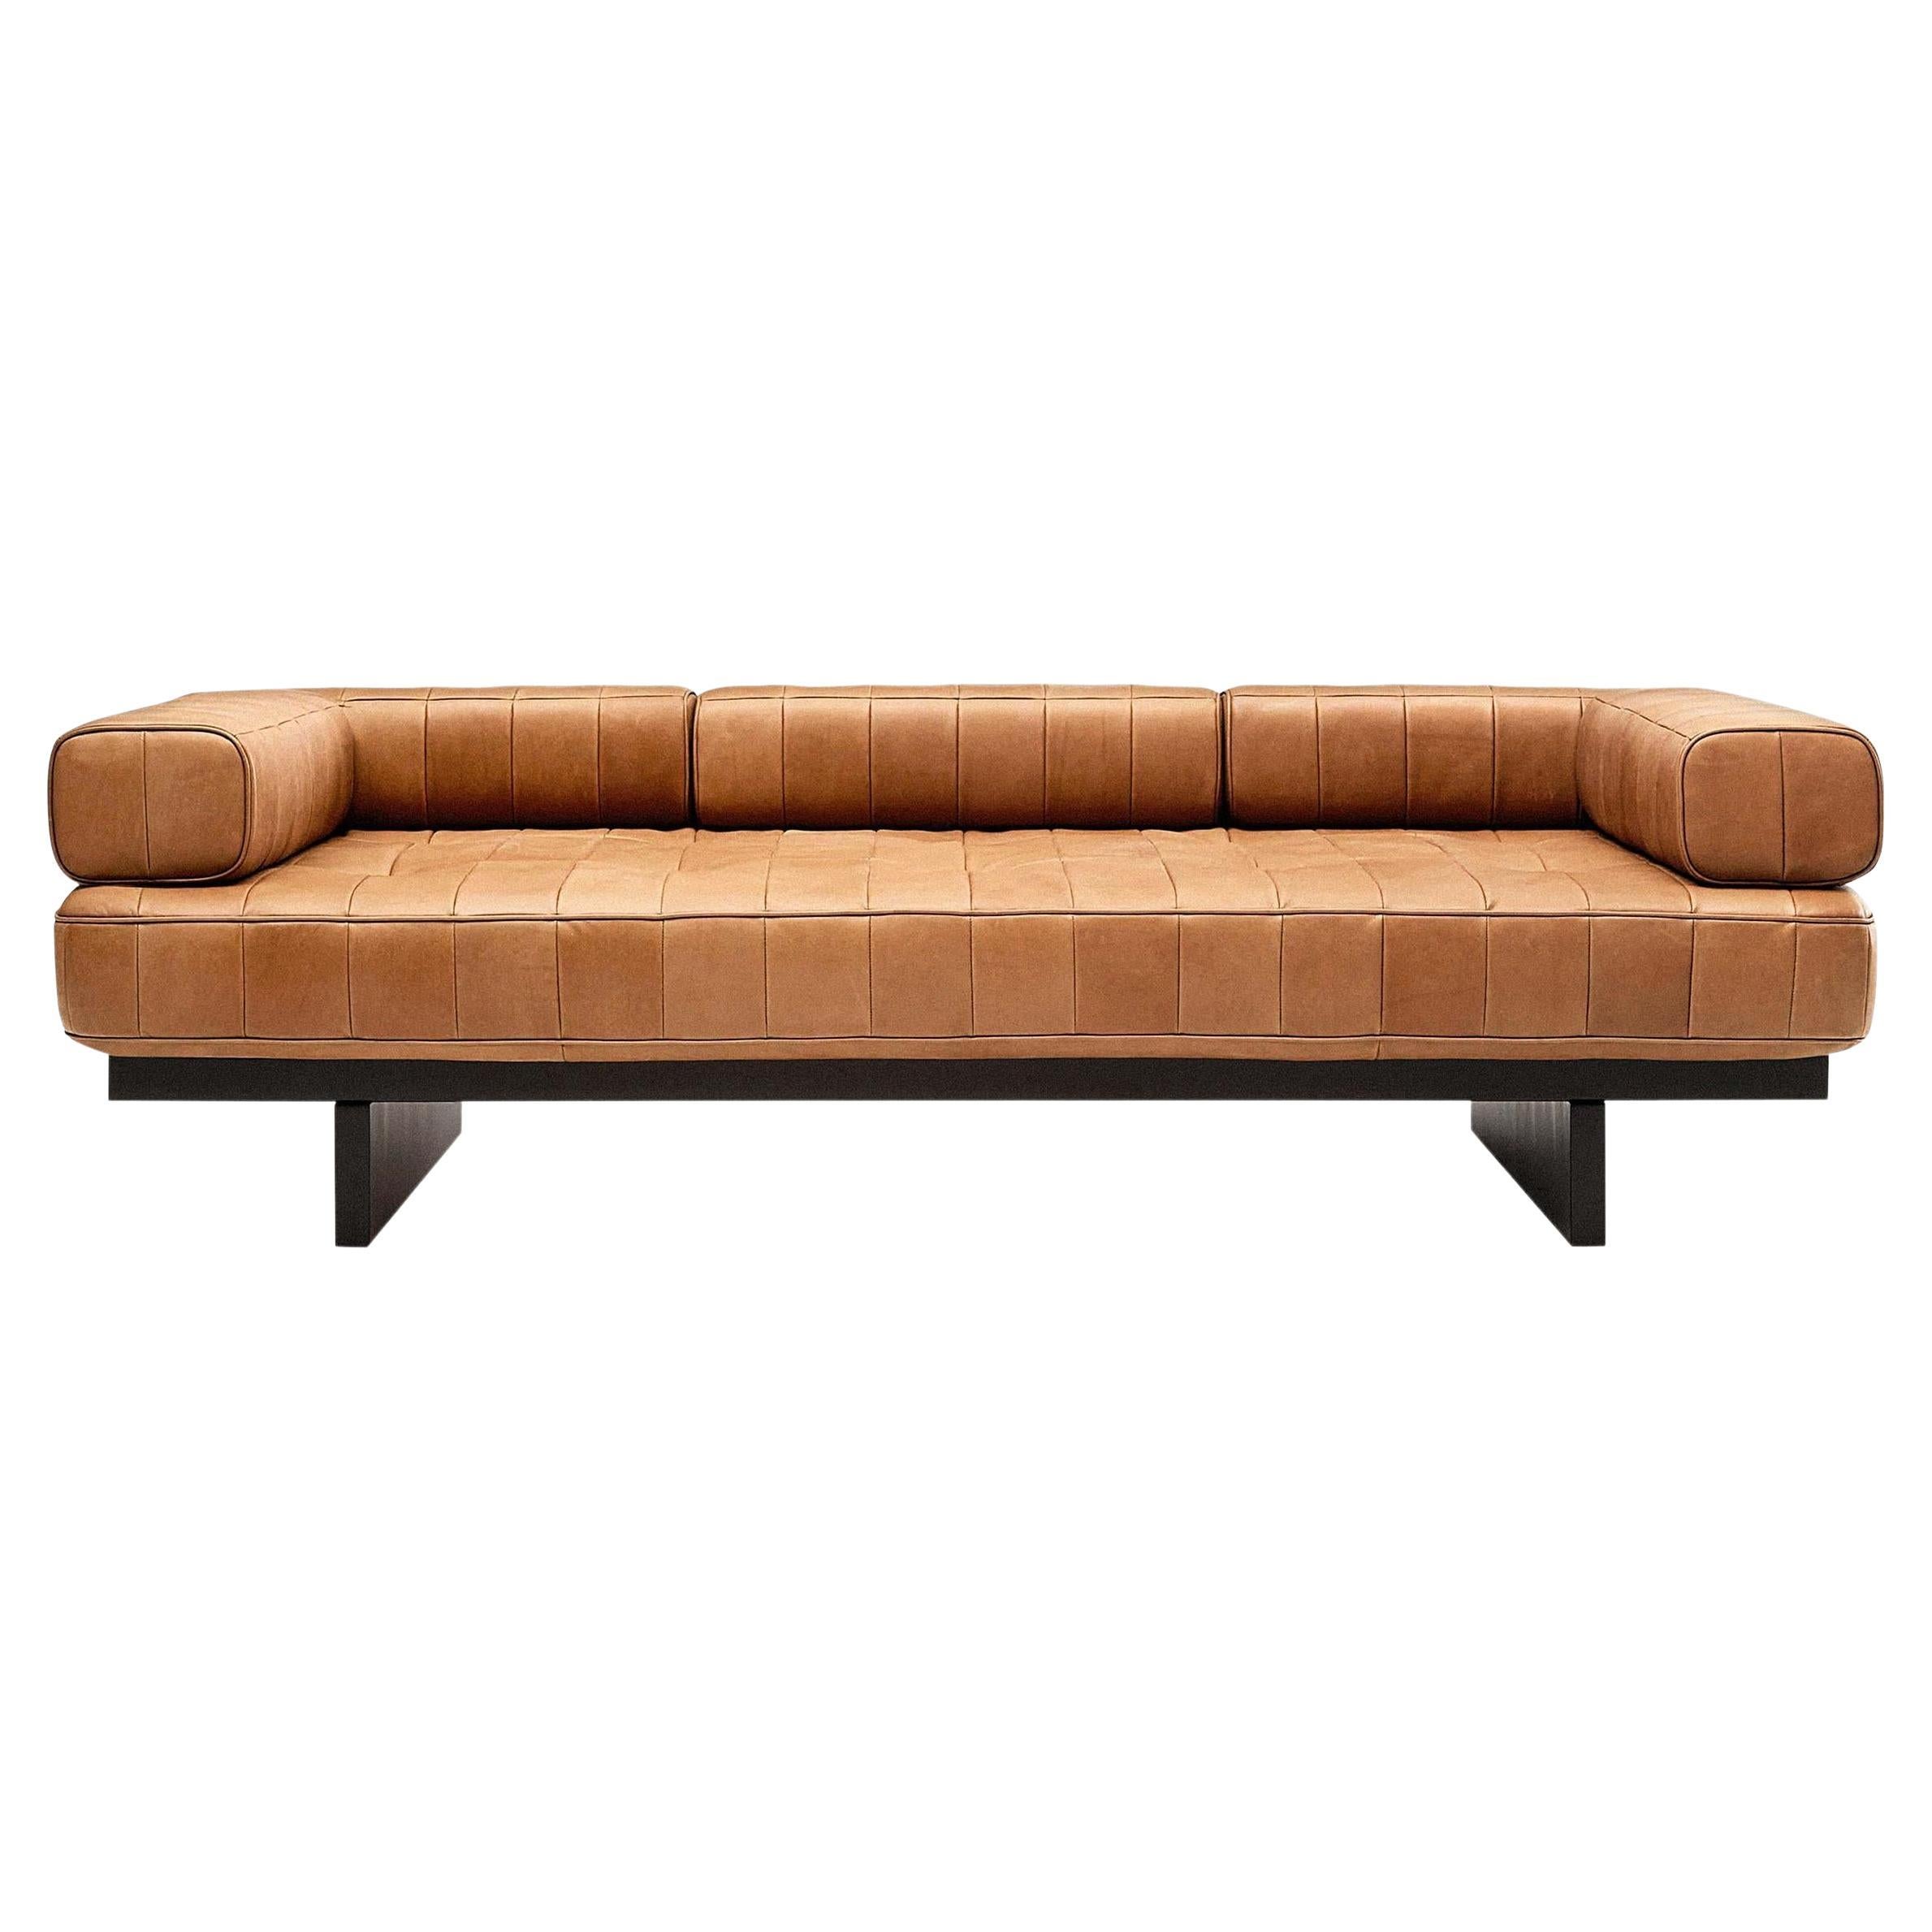 De Sede DS 80 Dreisitzer-Sofa aus natürlichem Cuoio-Leder in Natur